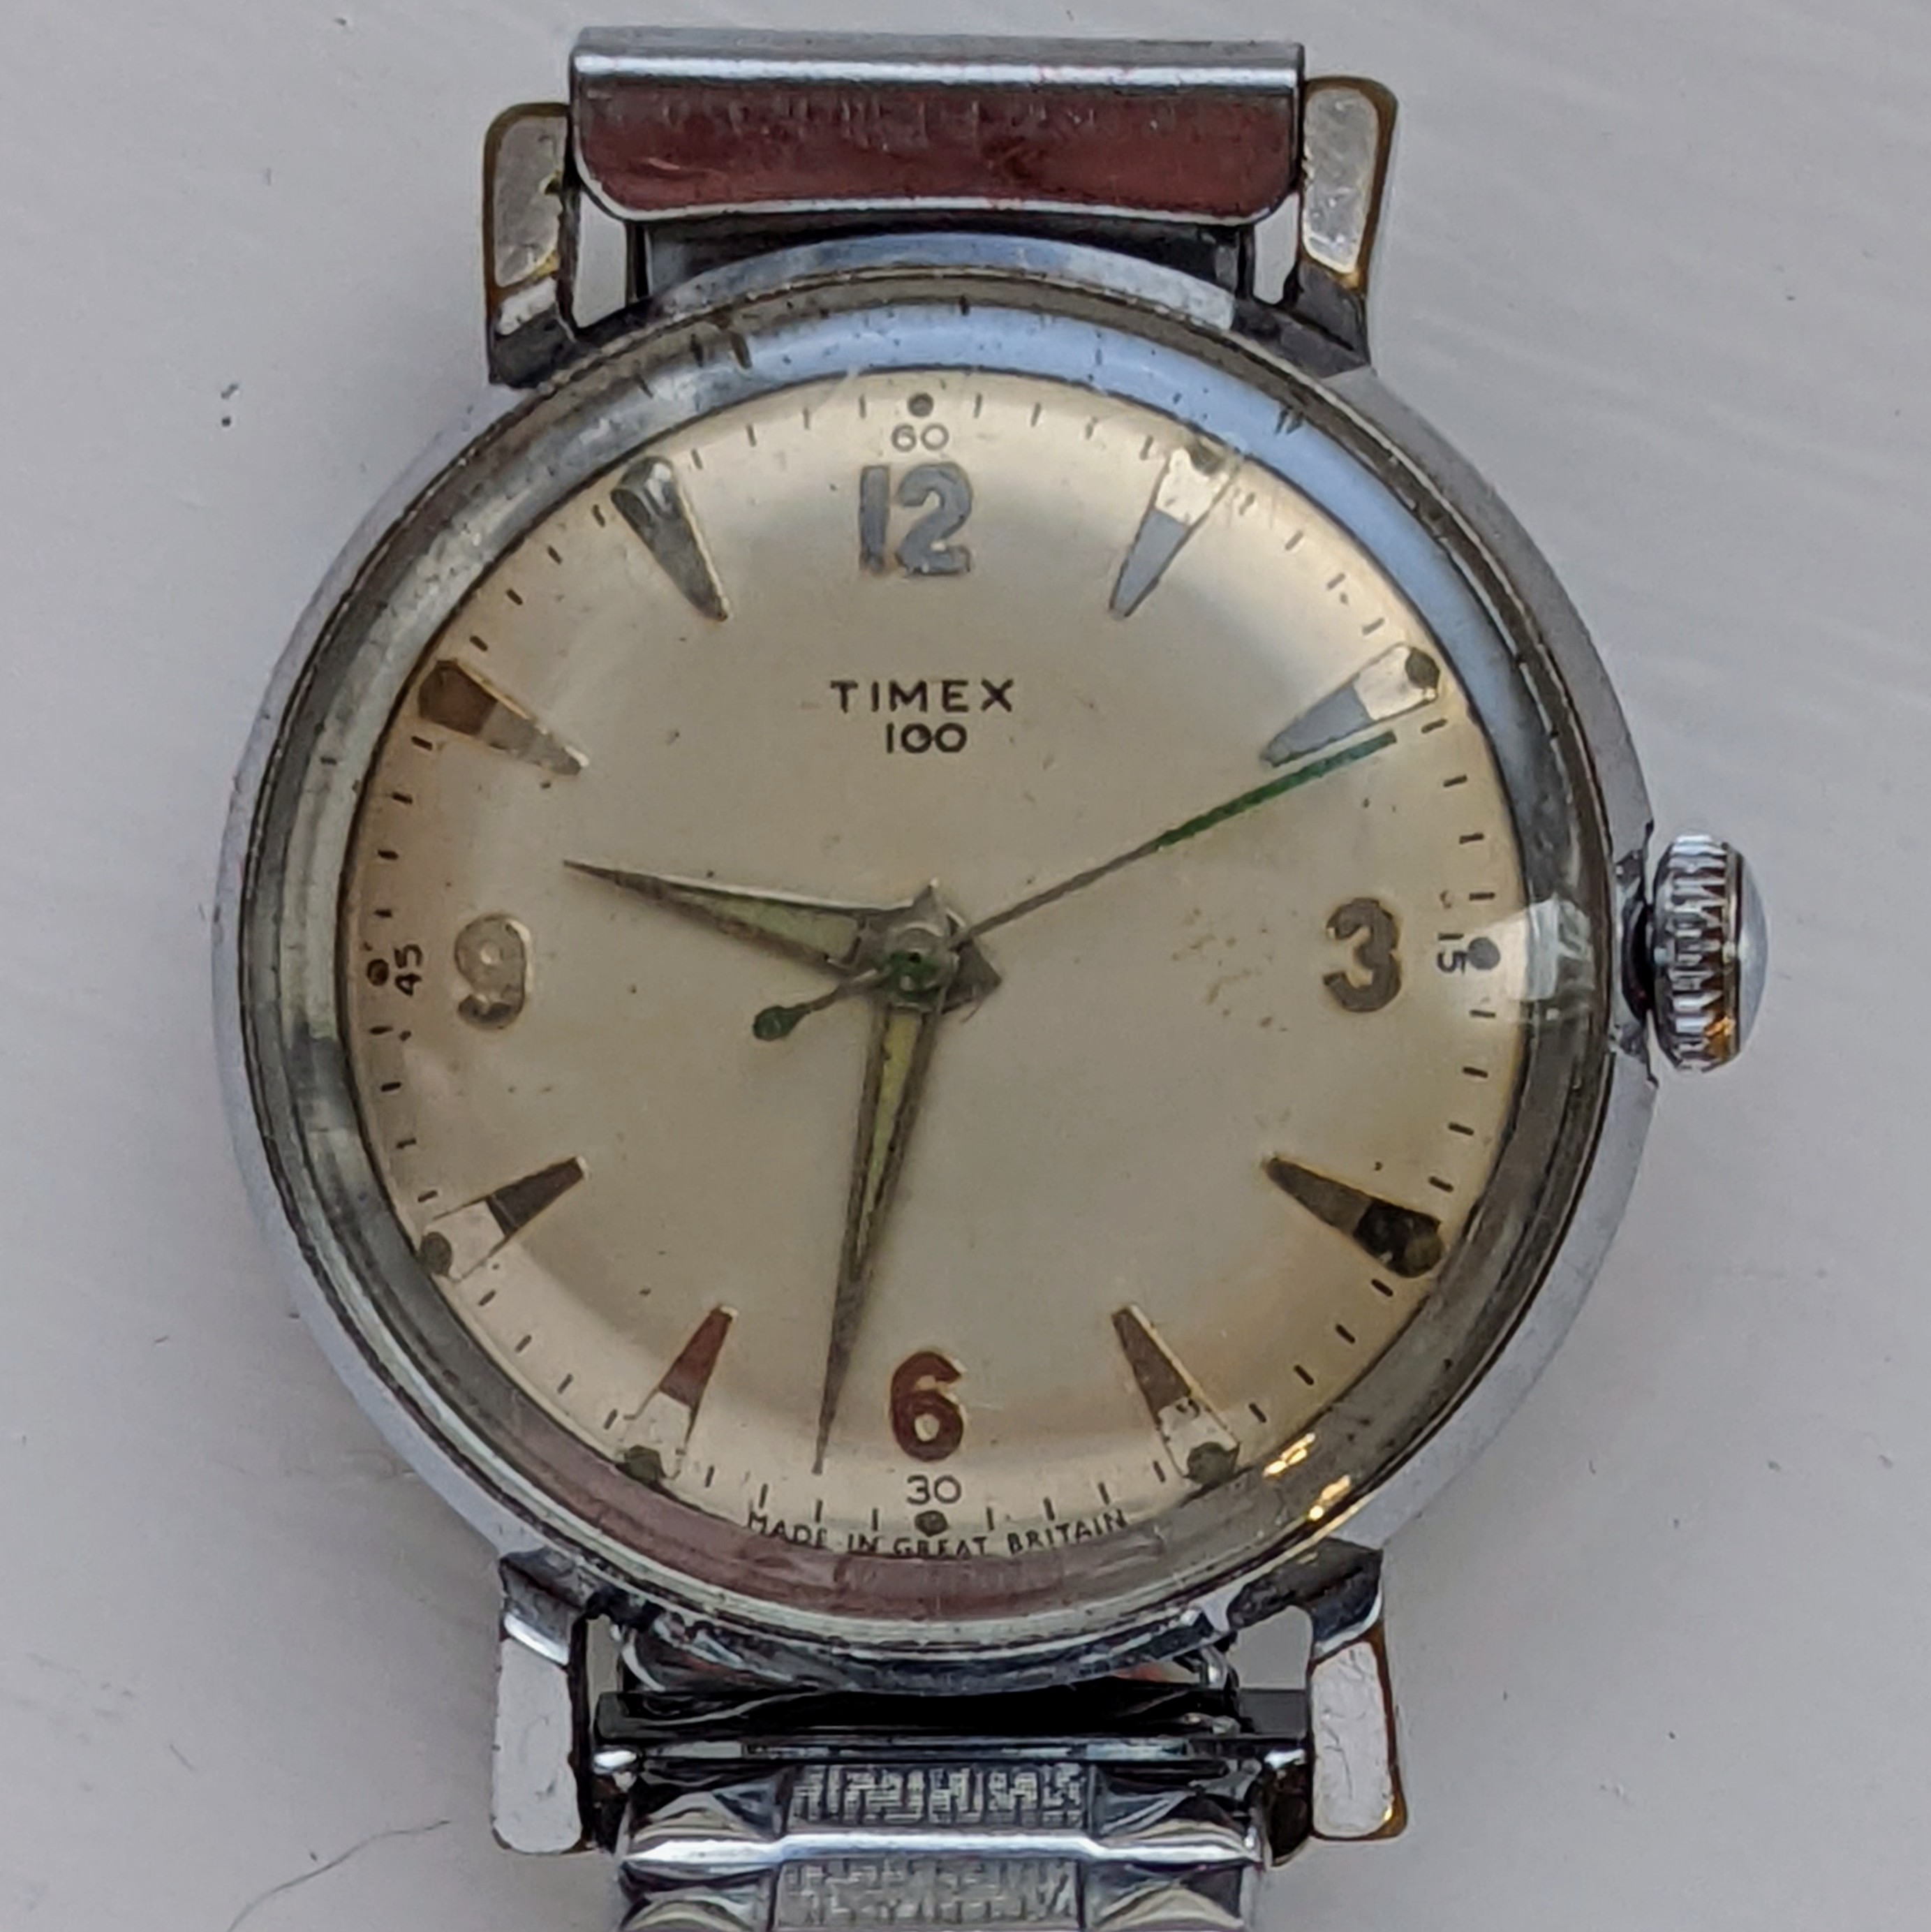 Timex 100 1969 Ref. 2077 2269